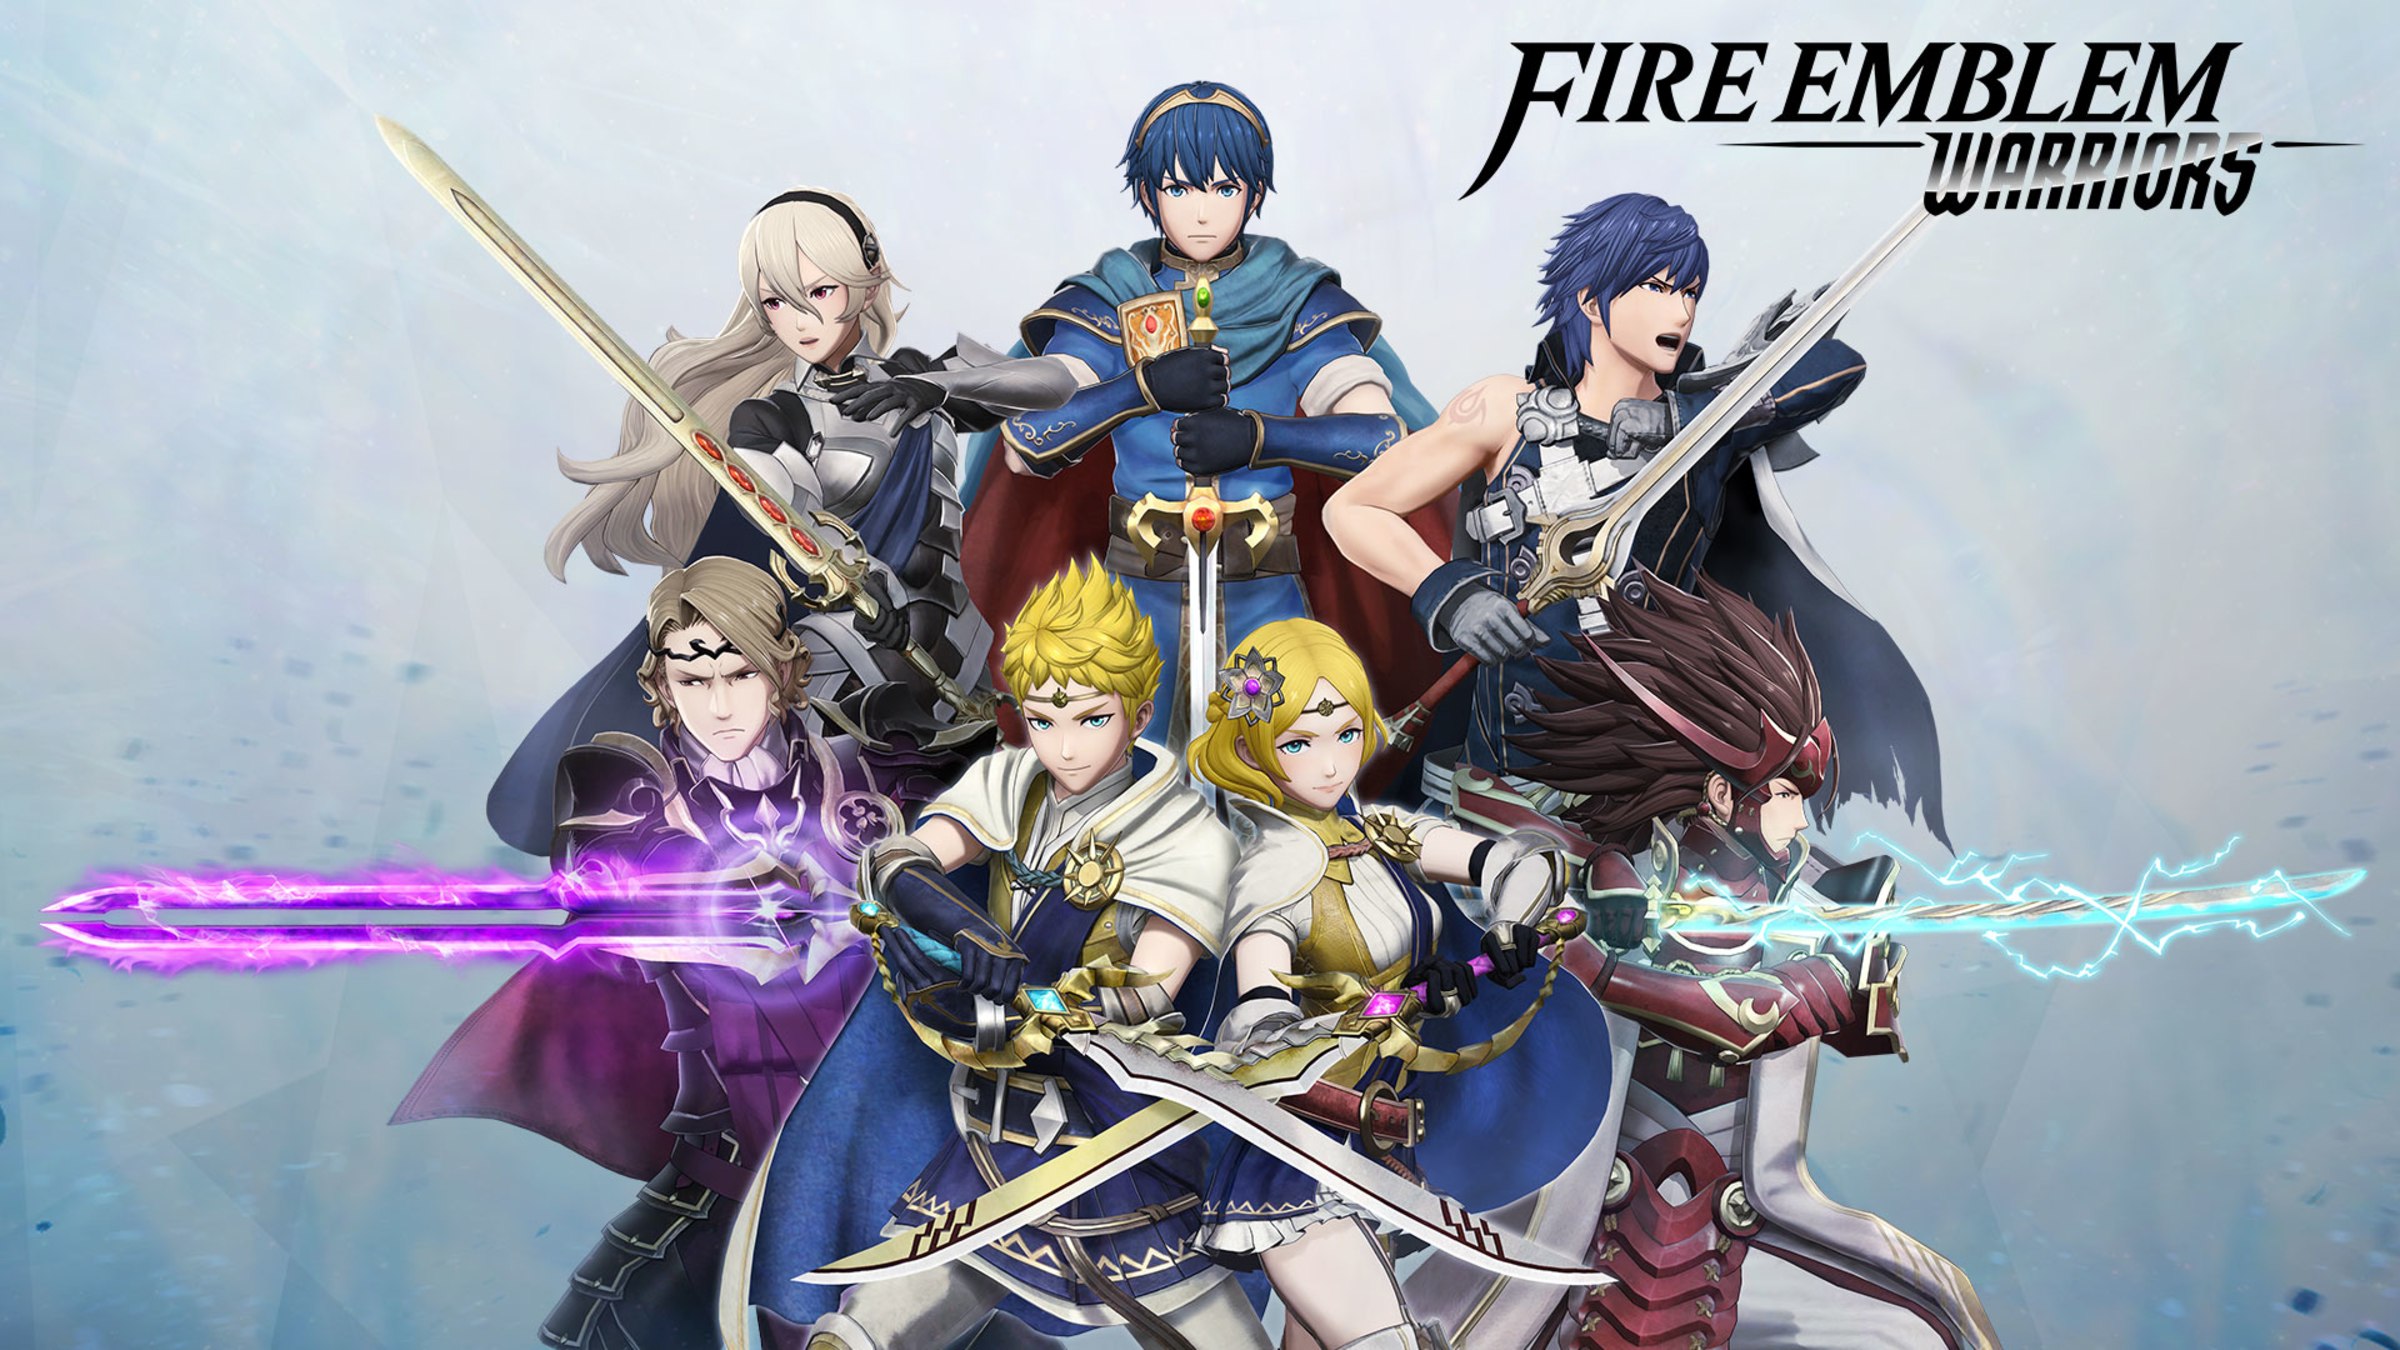 Fire Emblem Warriors Nintendo Switch - Official Nintendo for Site